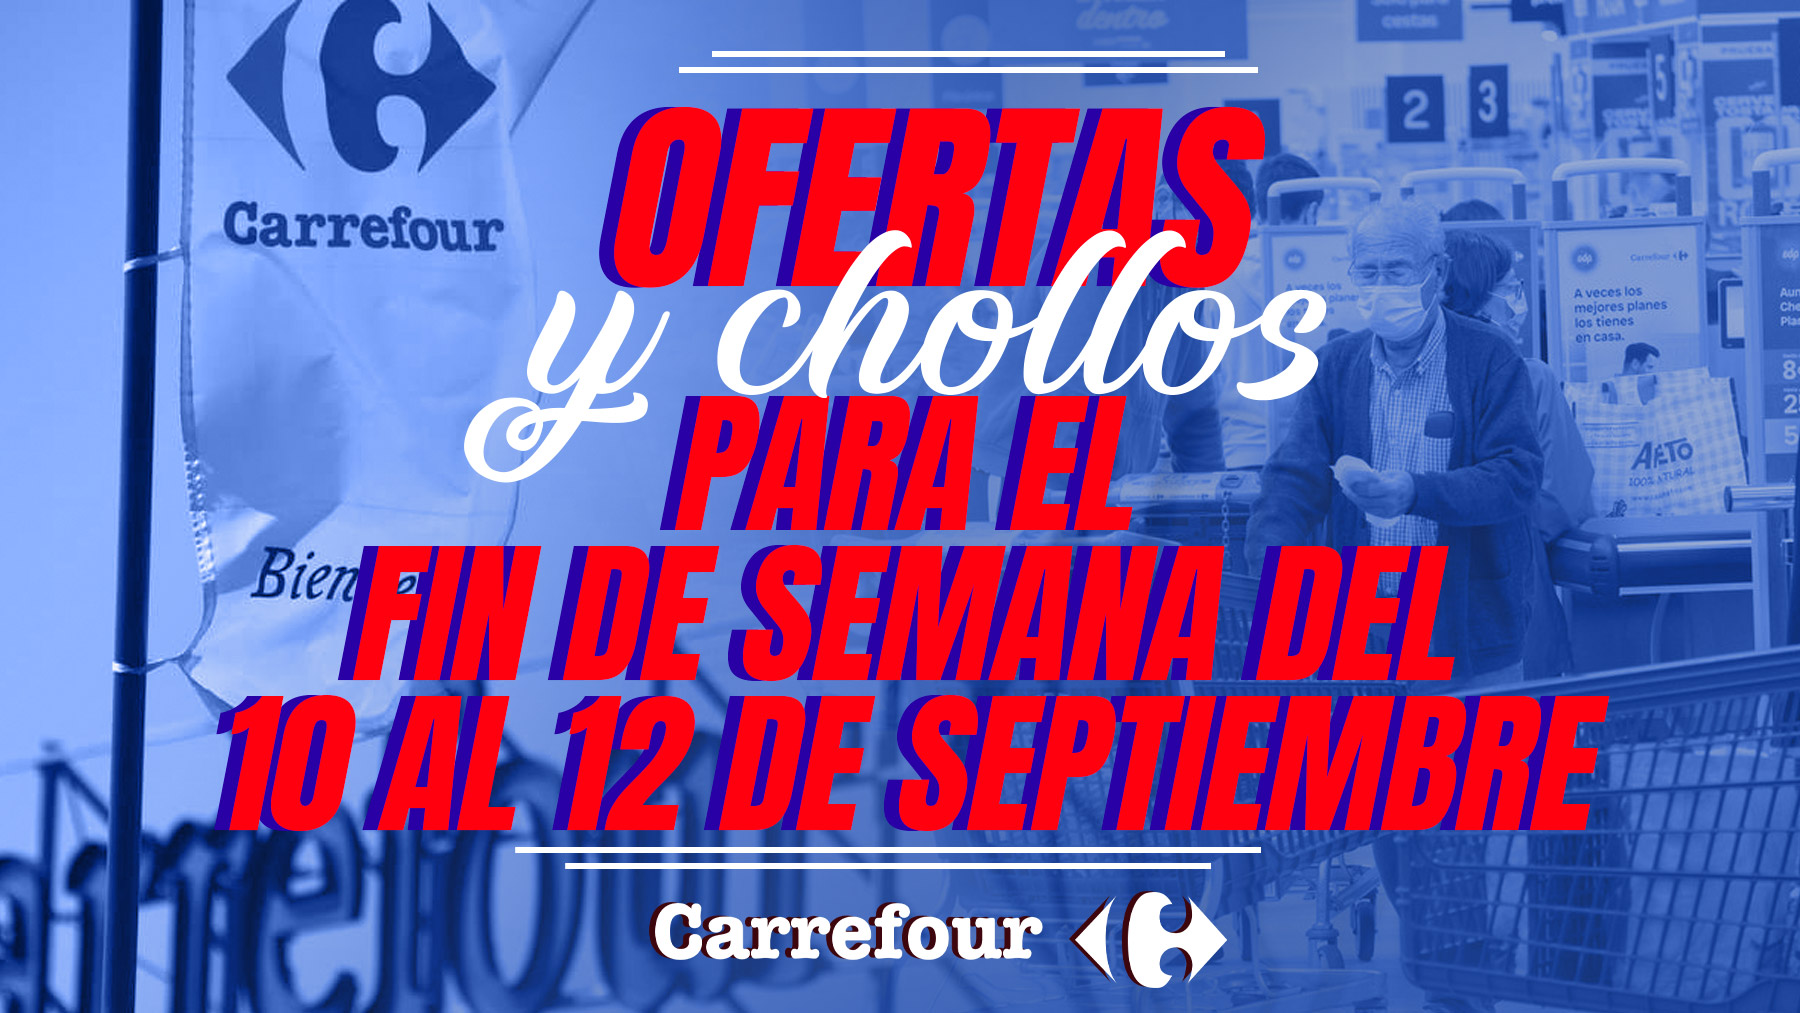 Descubre las mejores ofertas de productos Carrefour para este fin de semana